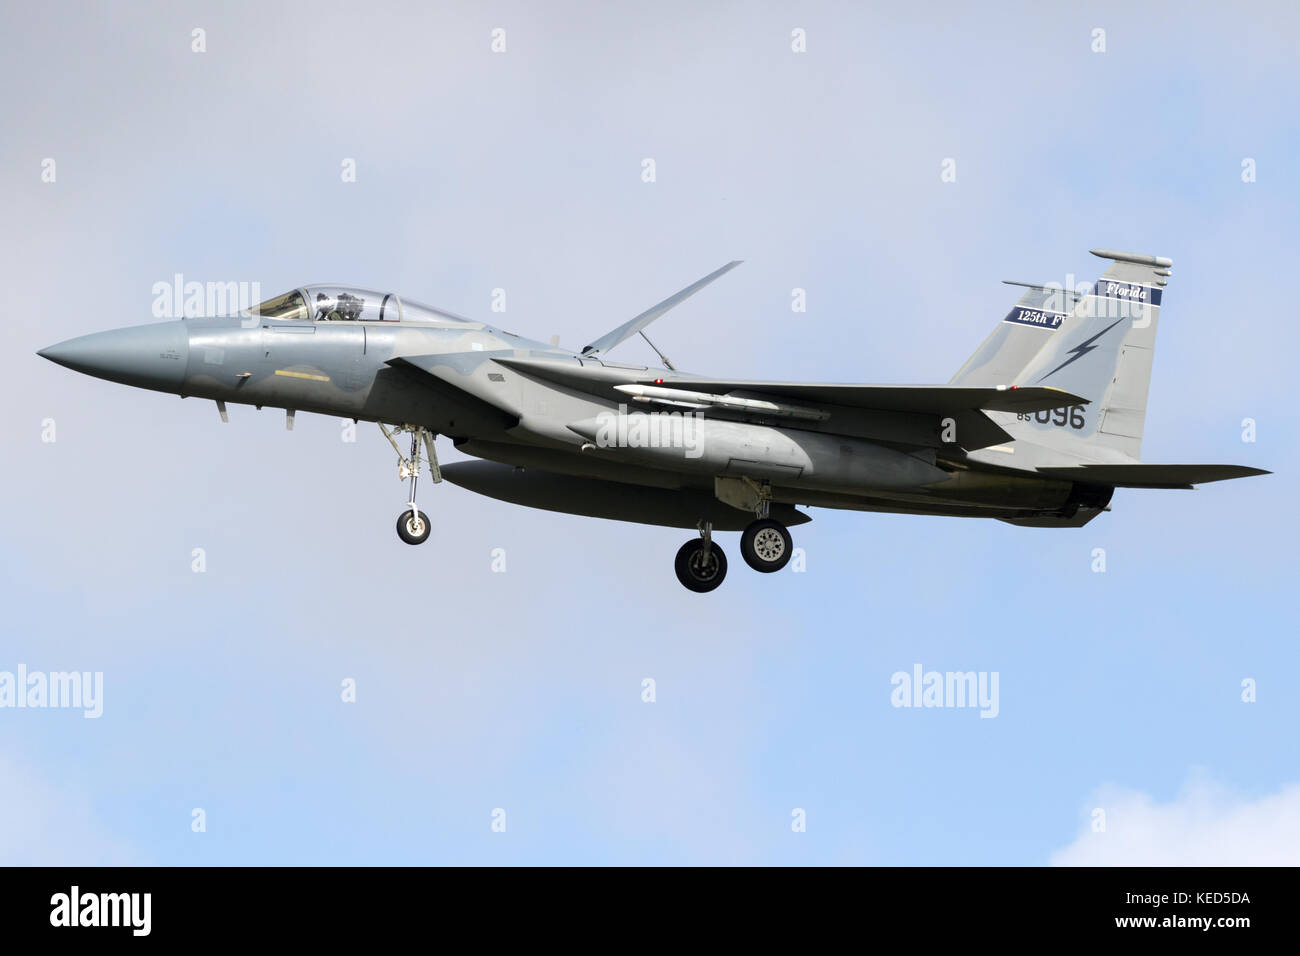 Leeuwarden, Niederlande - Apr 5, 2017: US Air Force f-15 Eagle fighter Jet plane Landing während der Übung Frisian Flag. Stockfoto